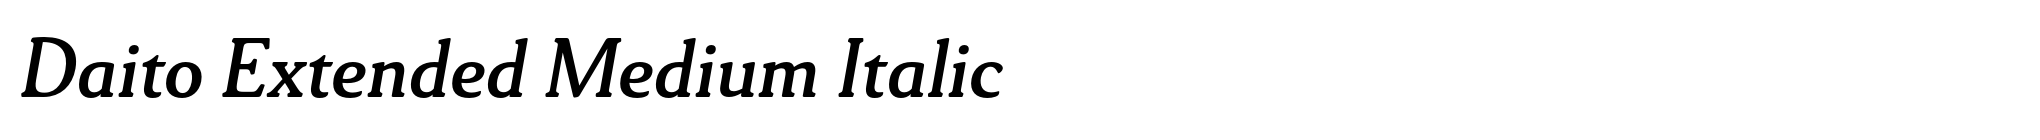 Daito Extended Medium Italic image